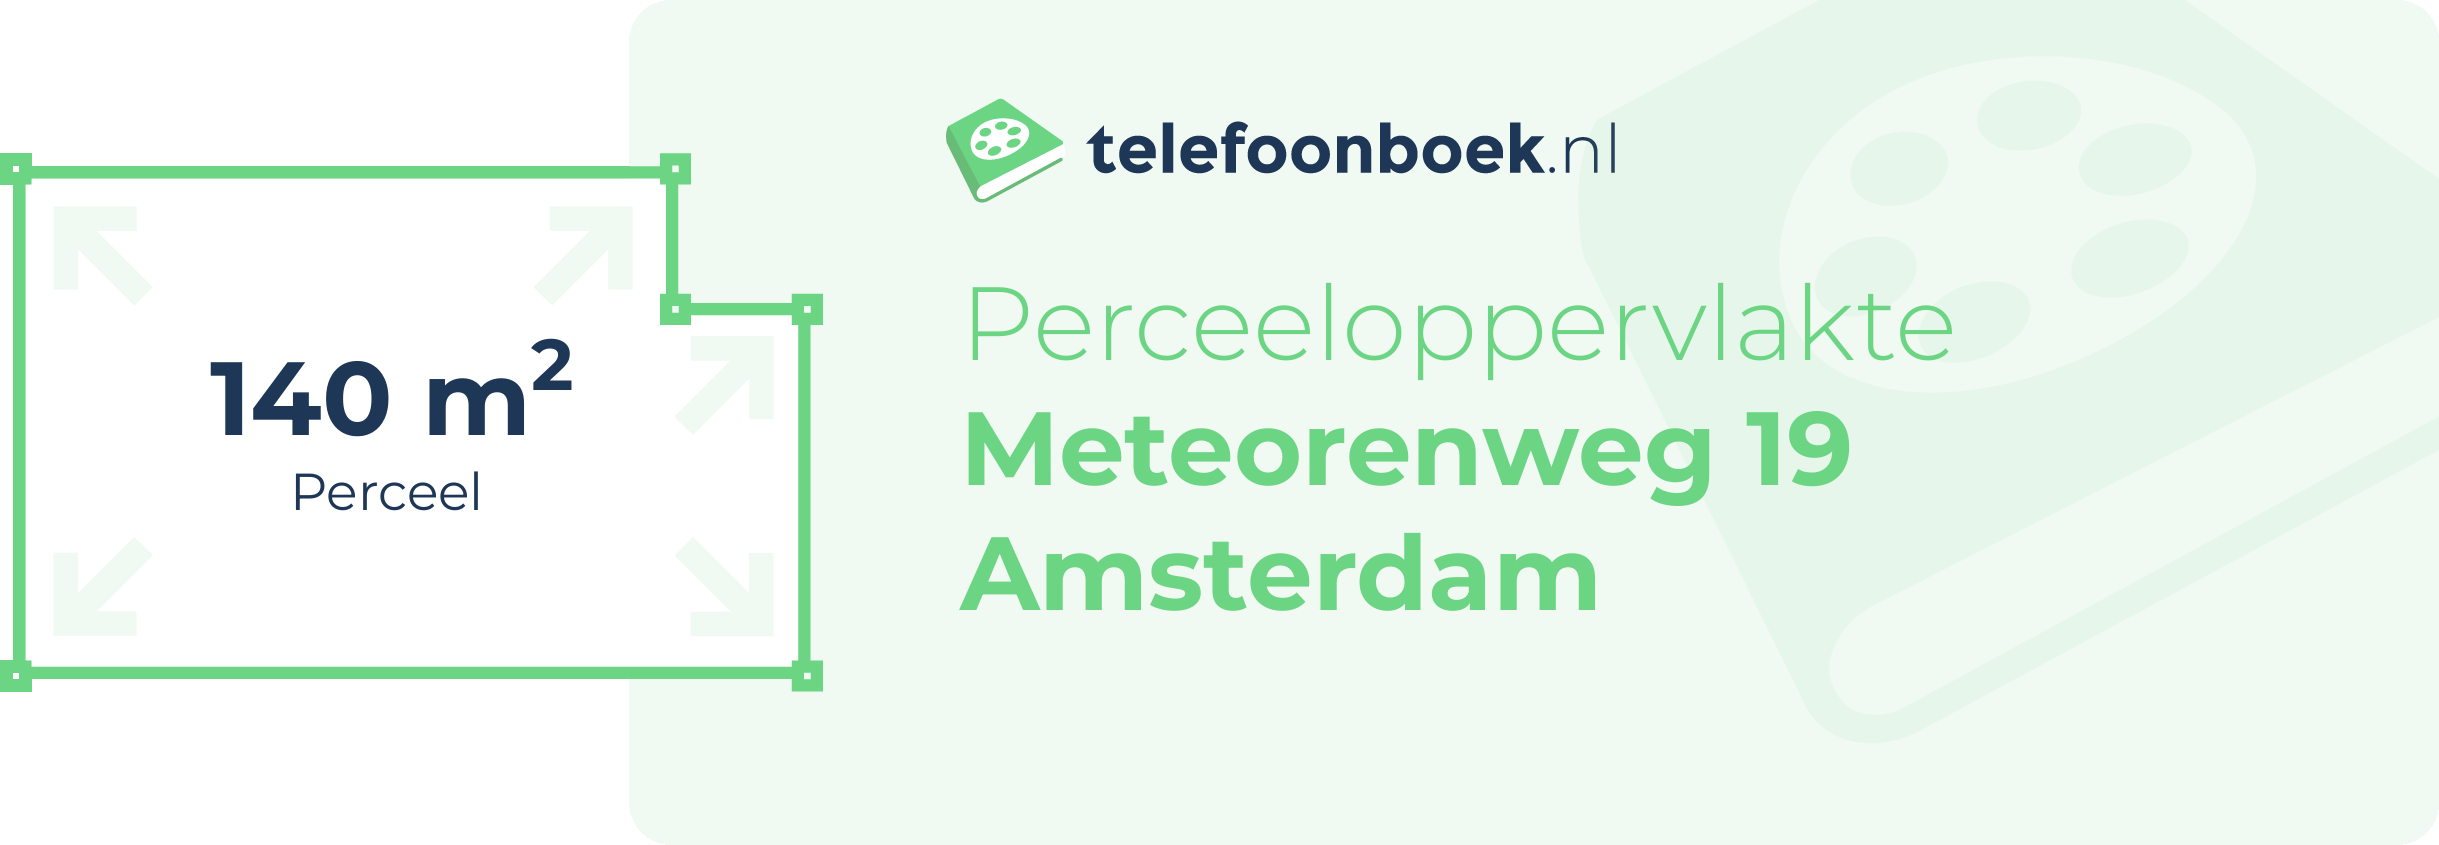 Perceeloppervlakte Meteorenweg 19 Amsterdam